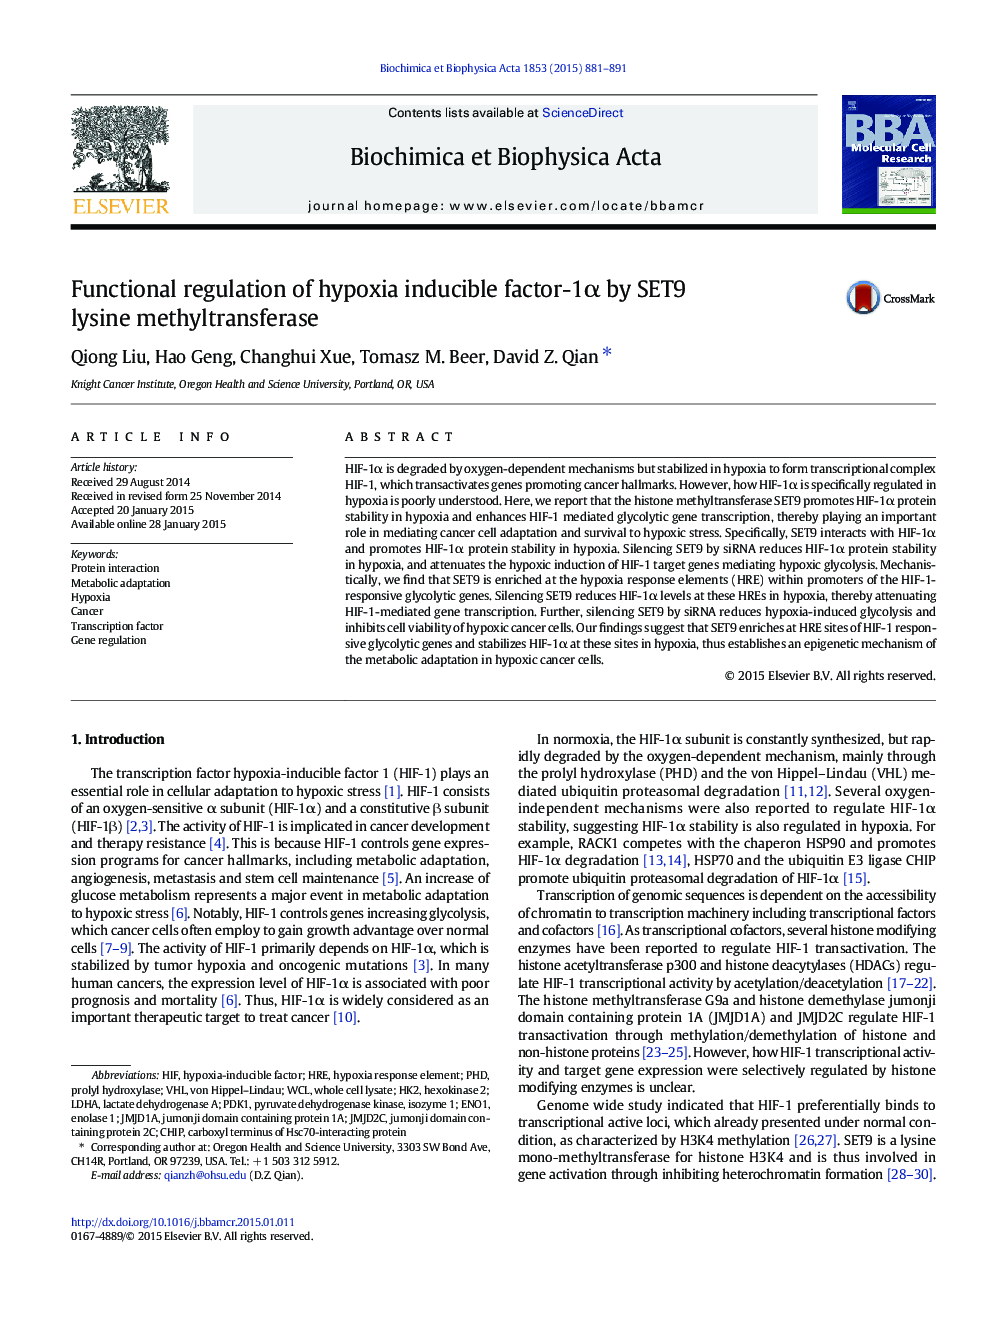 Functional regulation of hypoxia inducible factor-1α by SET9 lysine methyltransferase